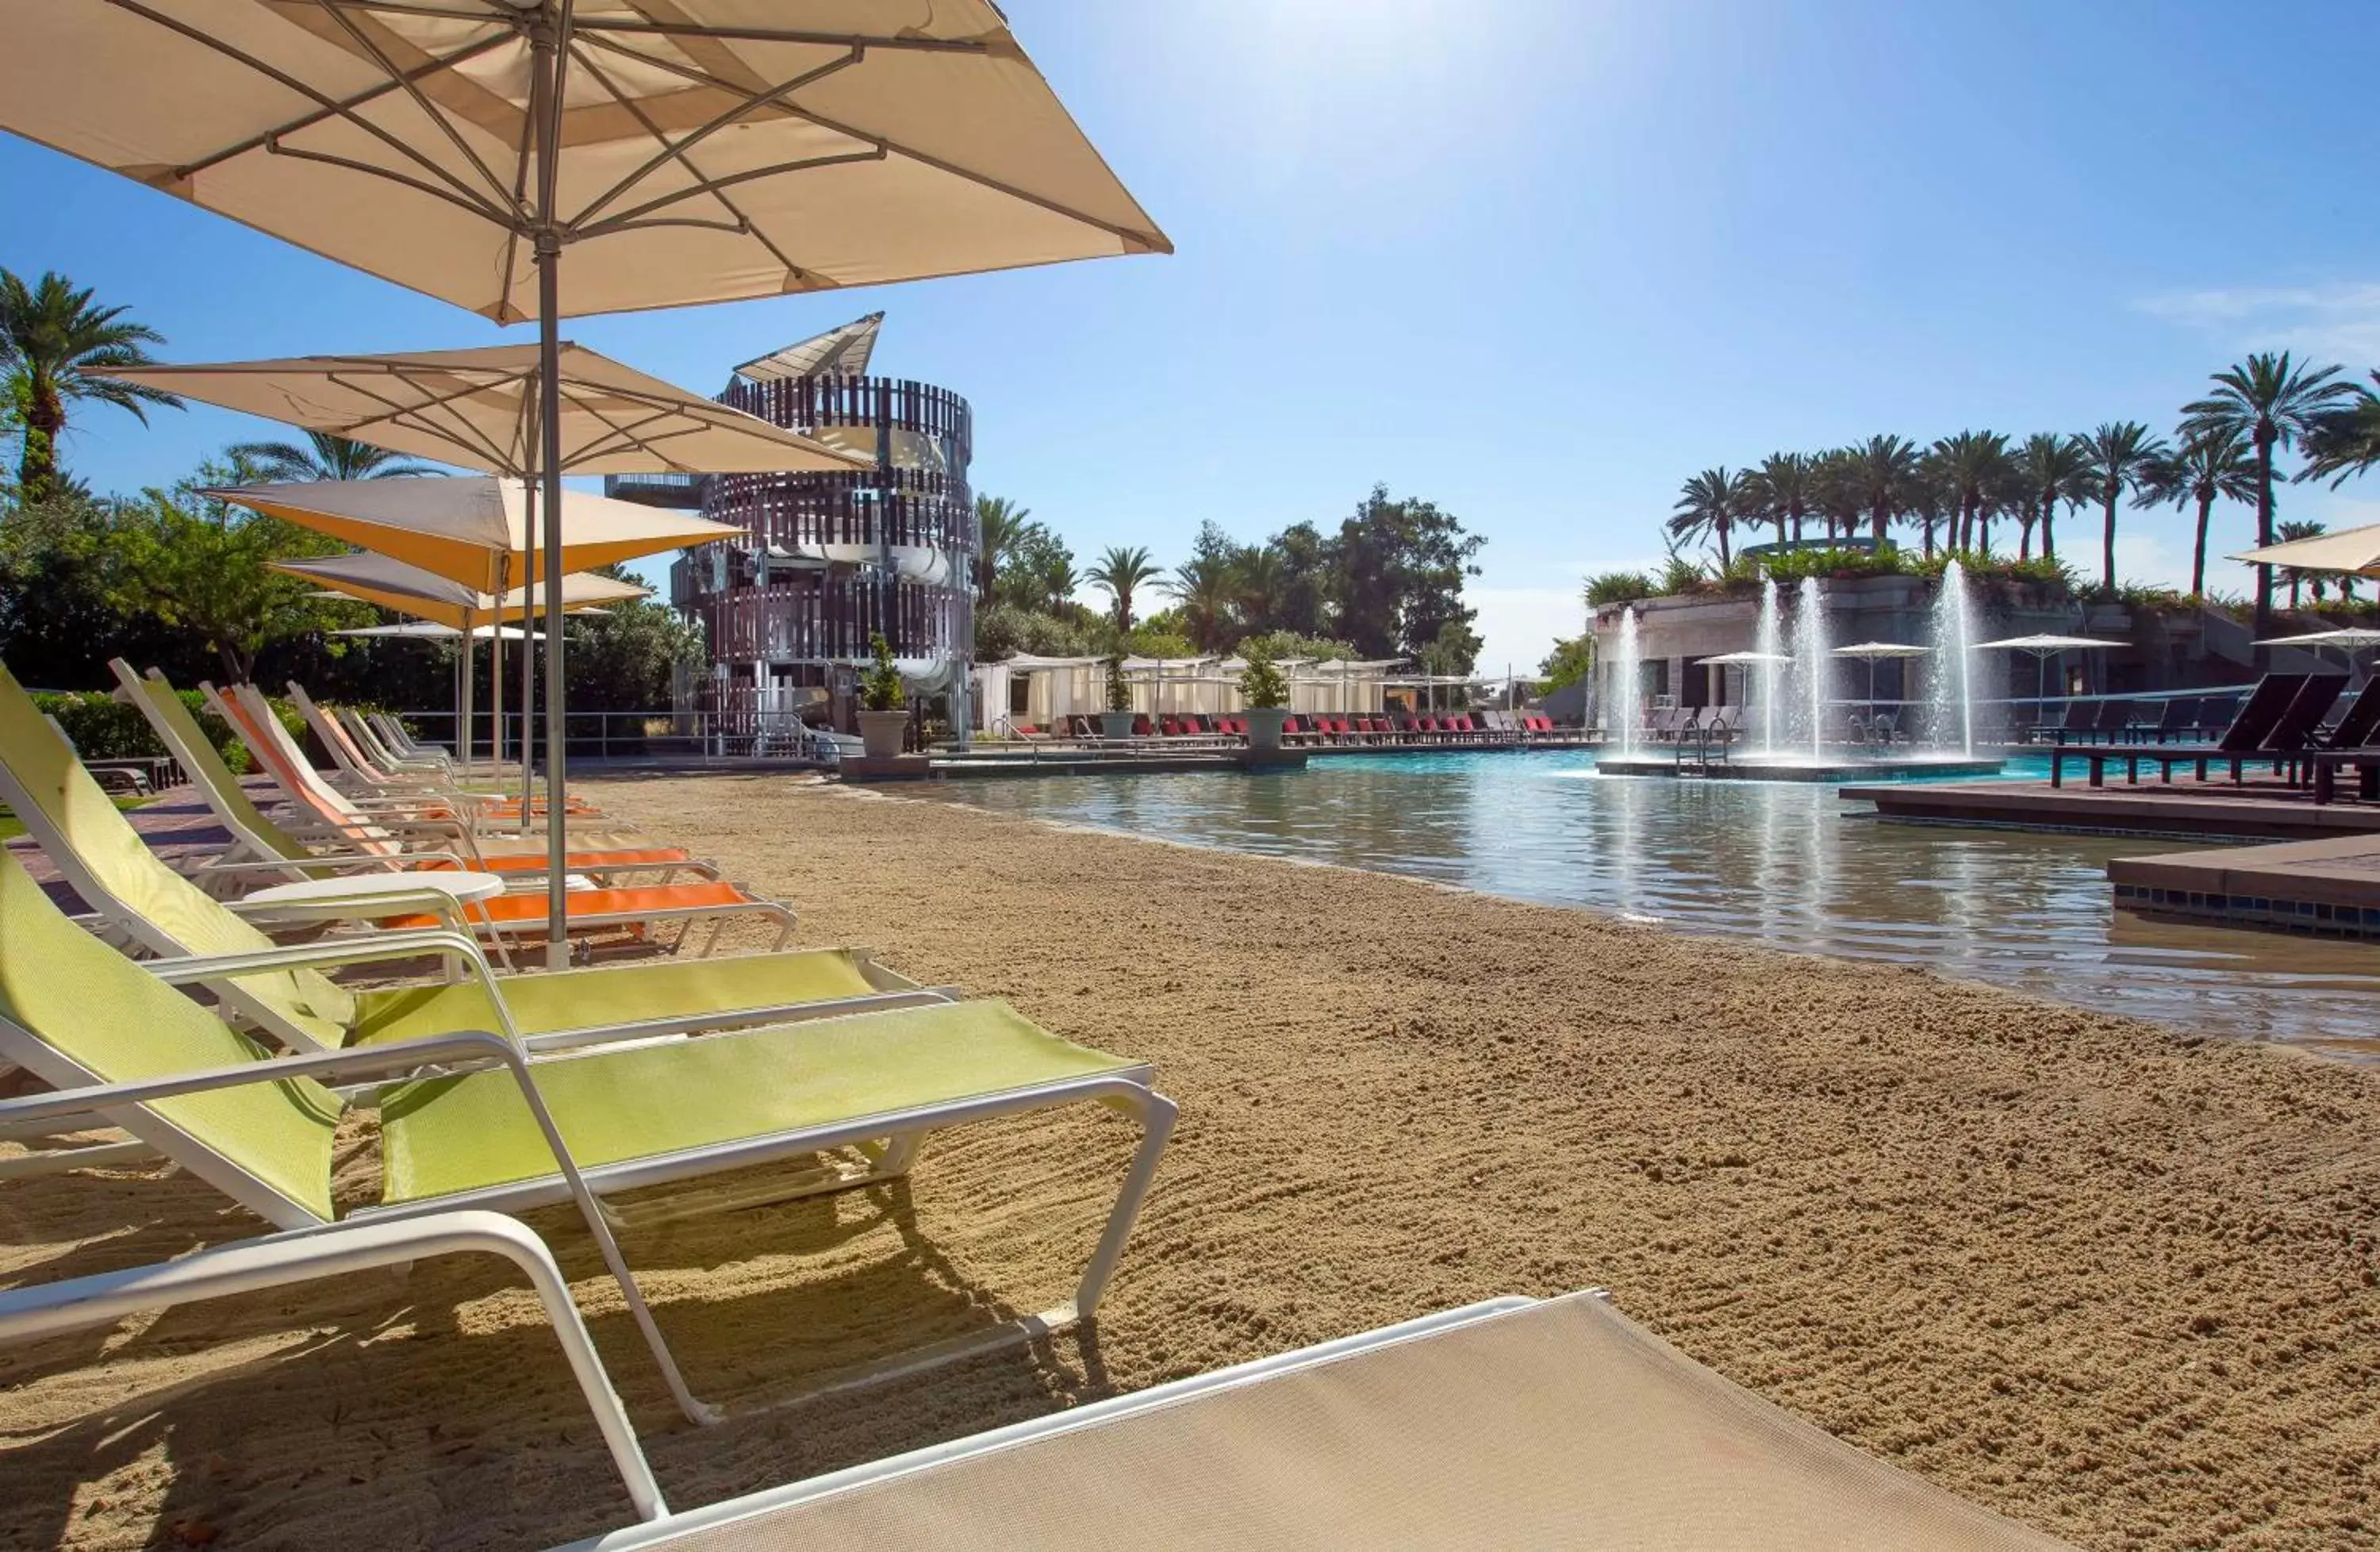 Swimming pool in Hyatt Regency Scottsdale Resort and Spa